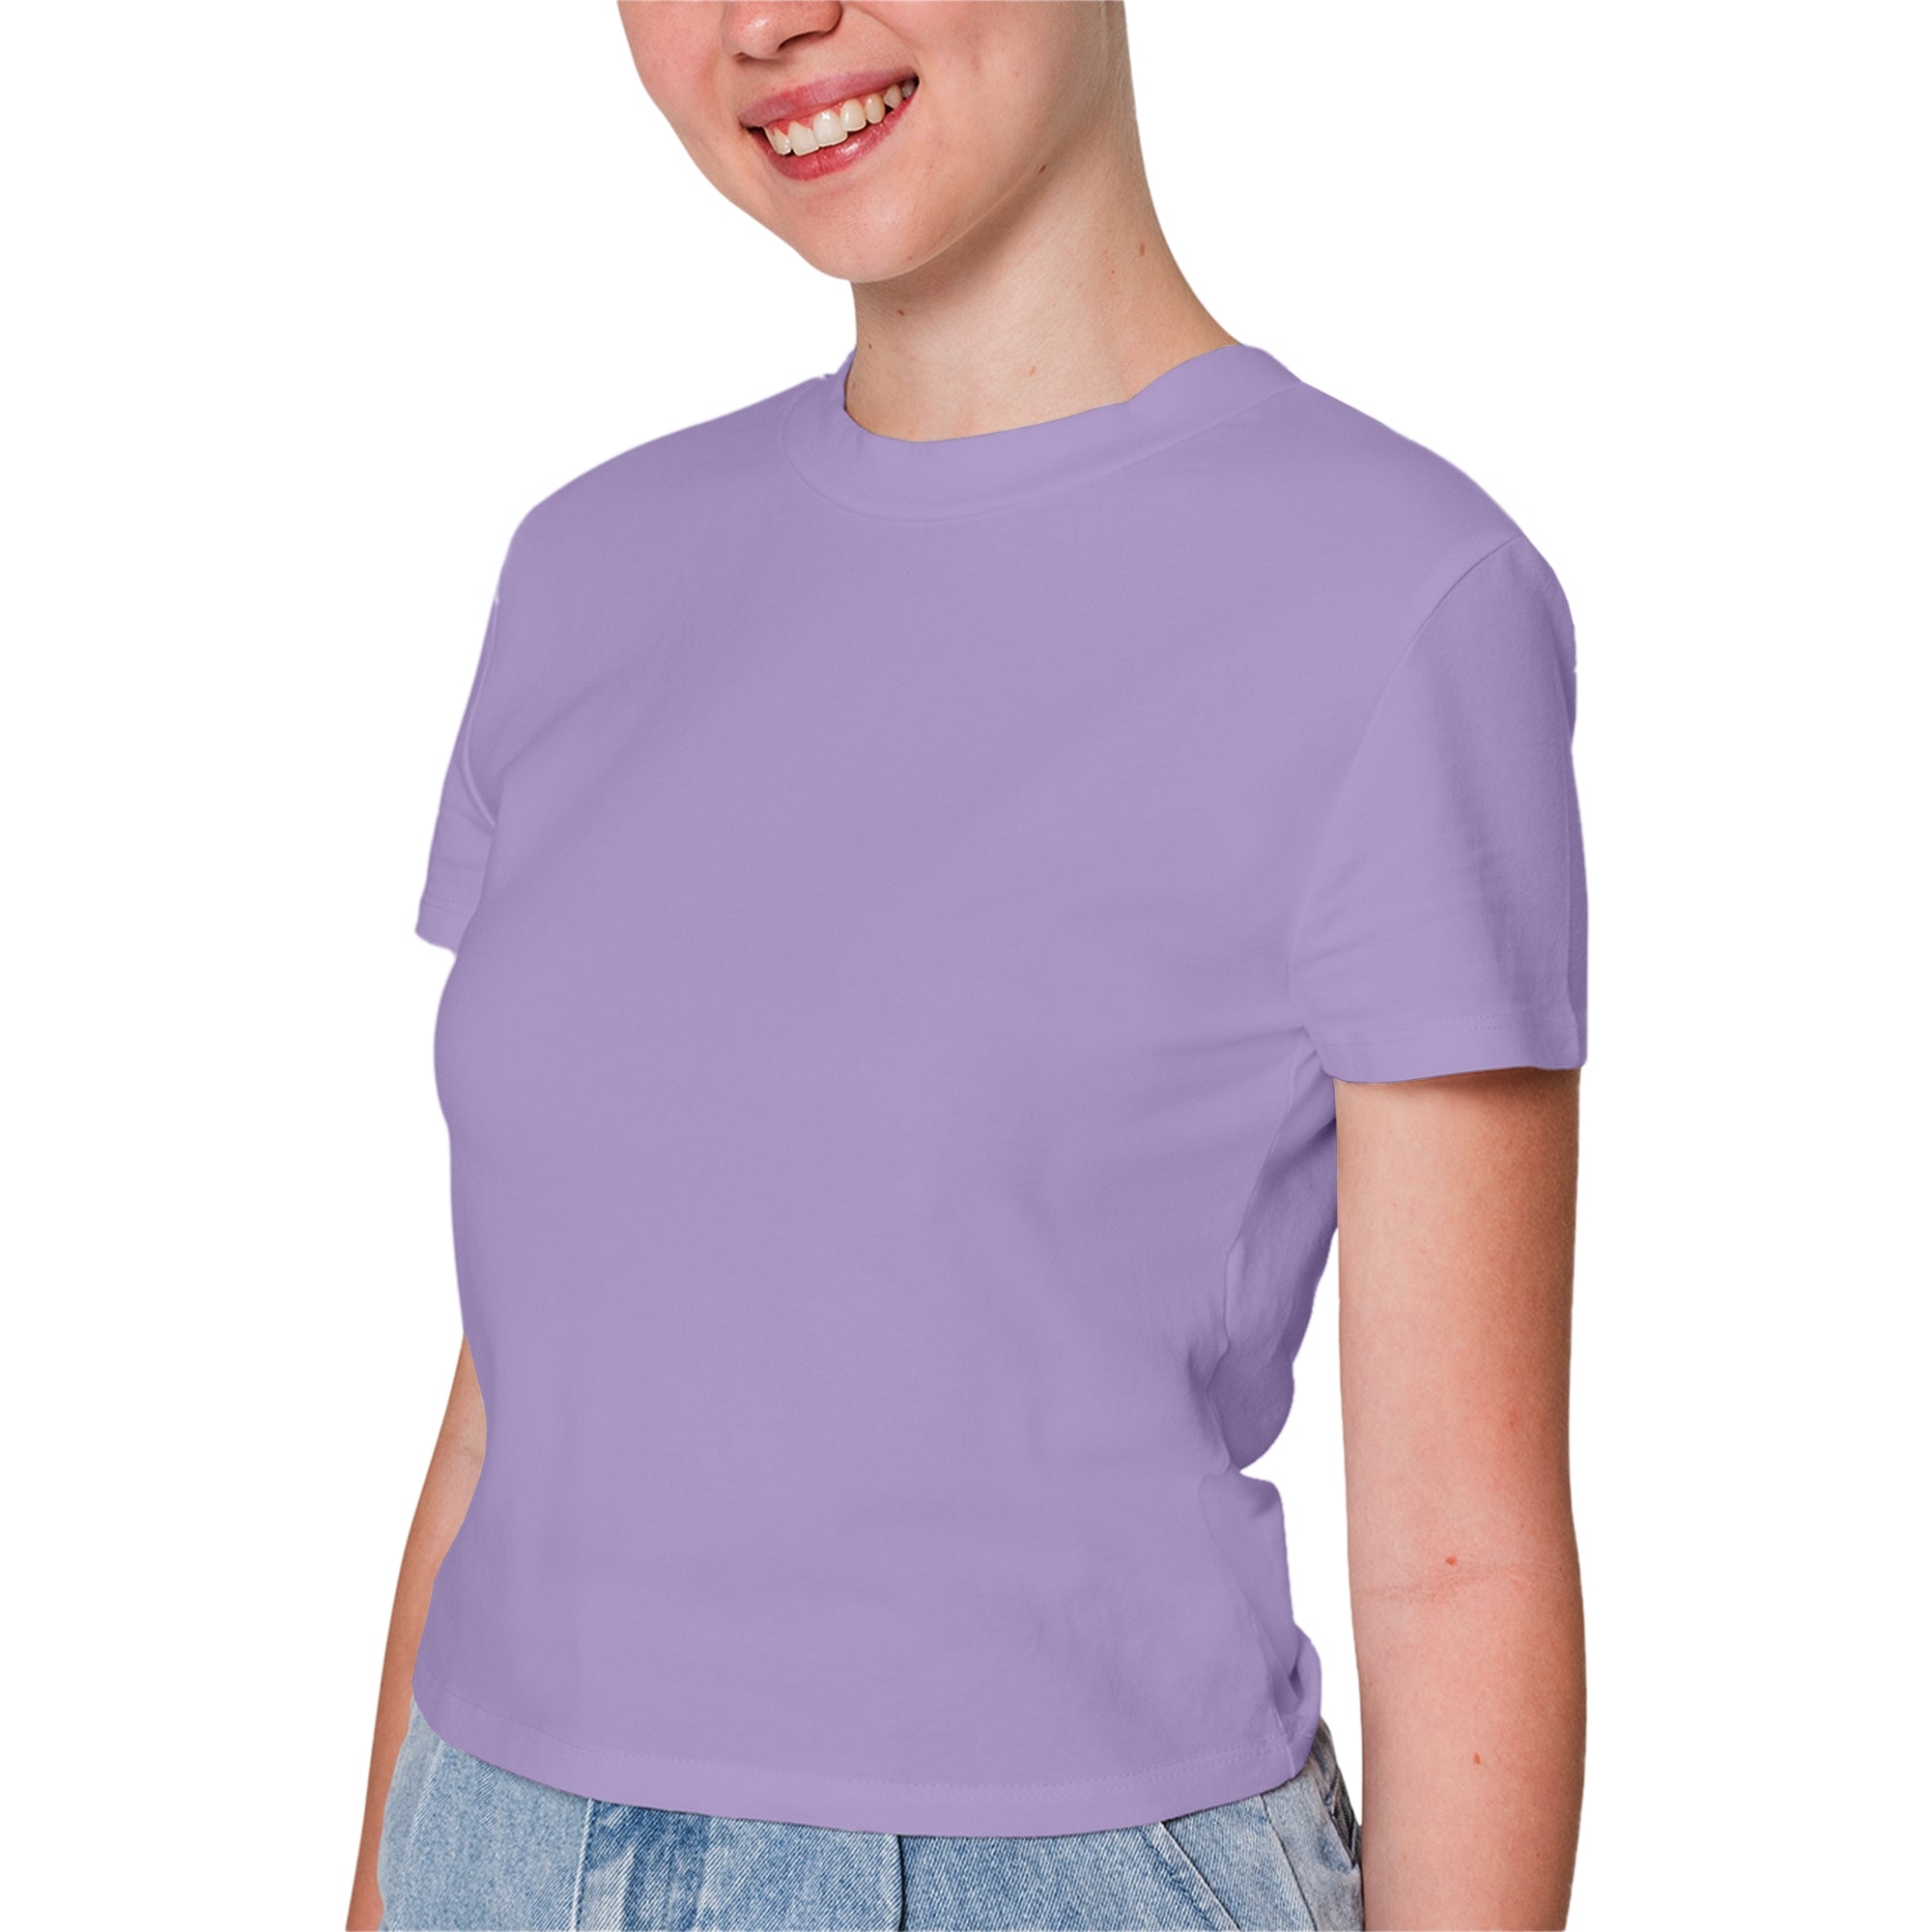 Light Purple T-Shirt For Women